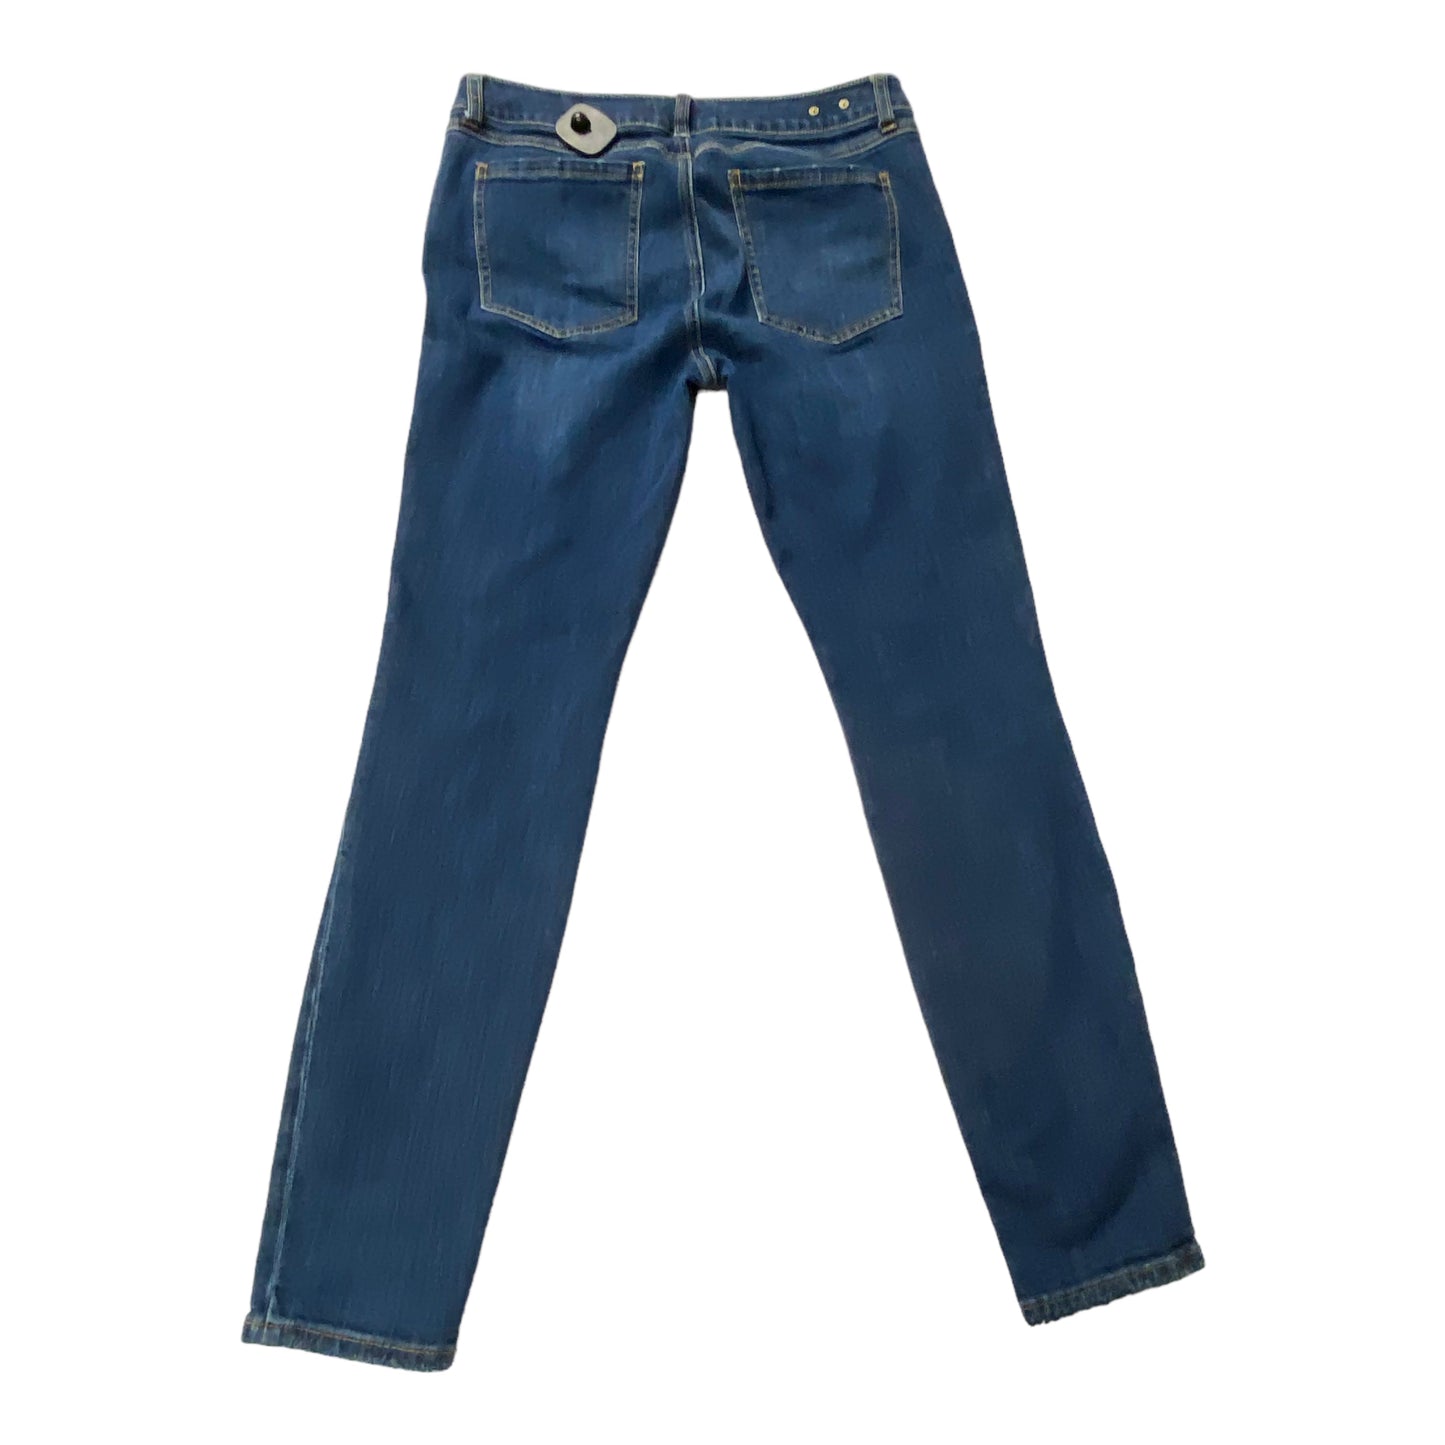 Blue Denim Jeans Skinny Cabi, Size 8